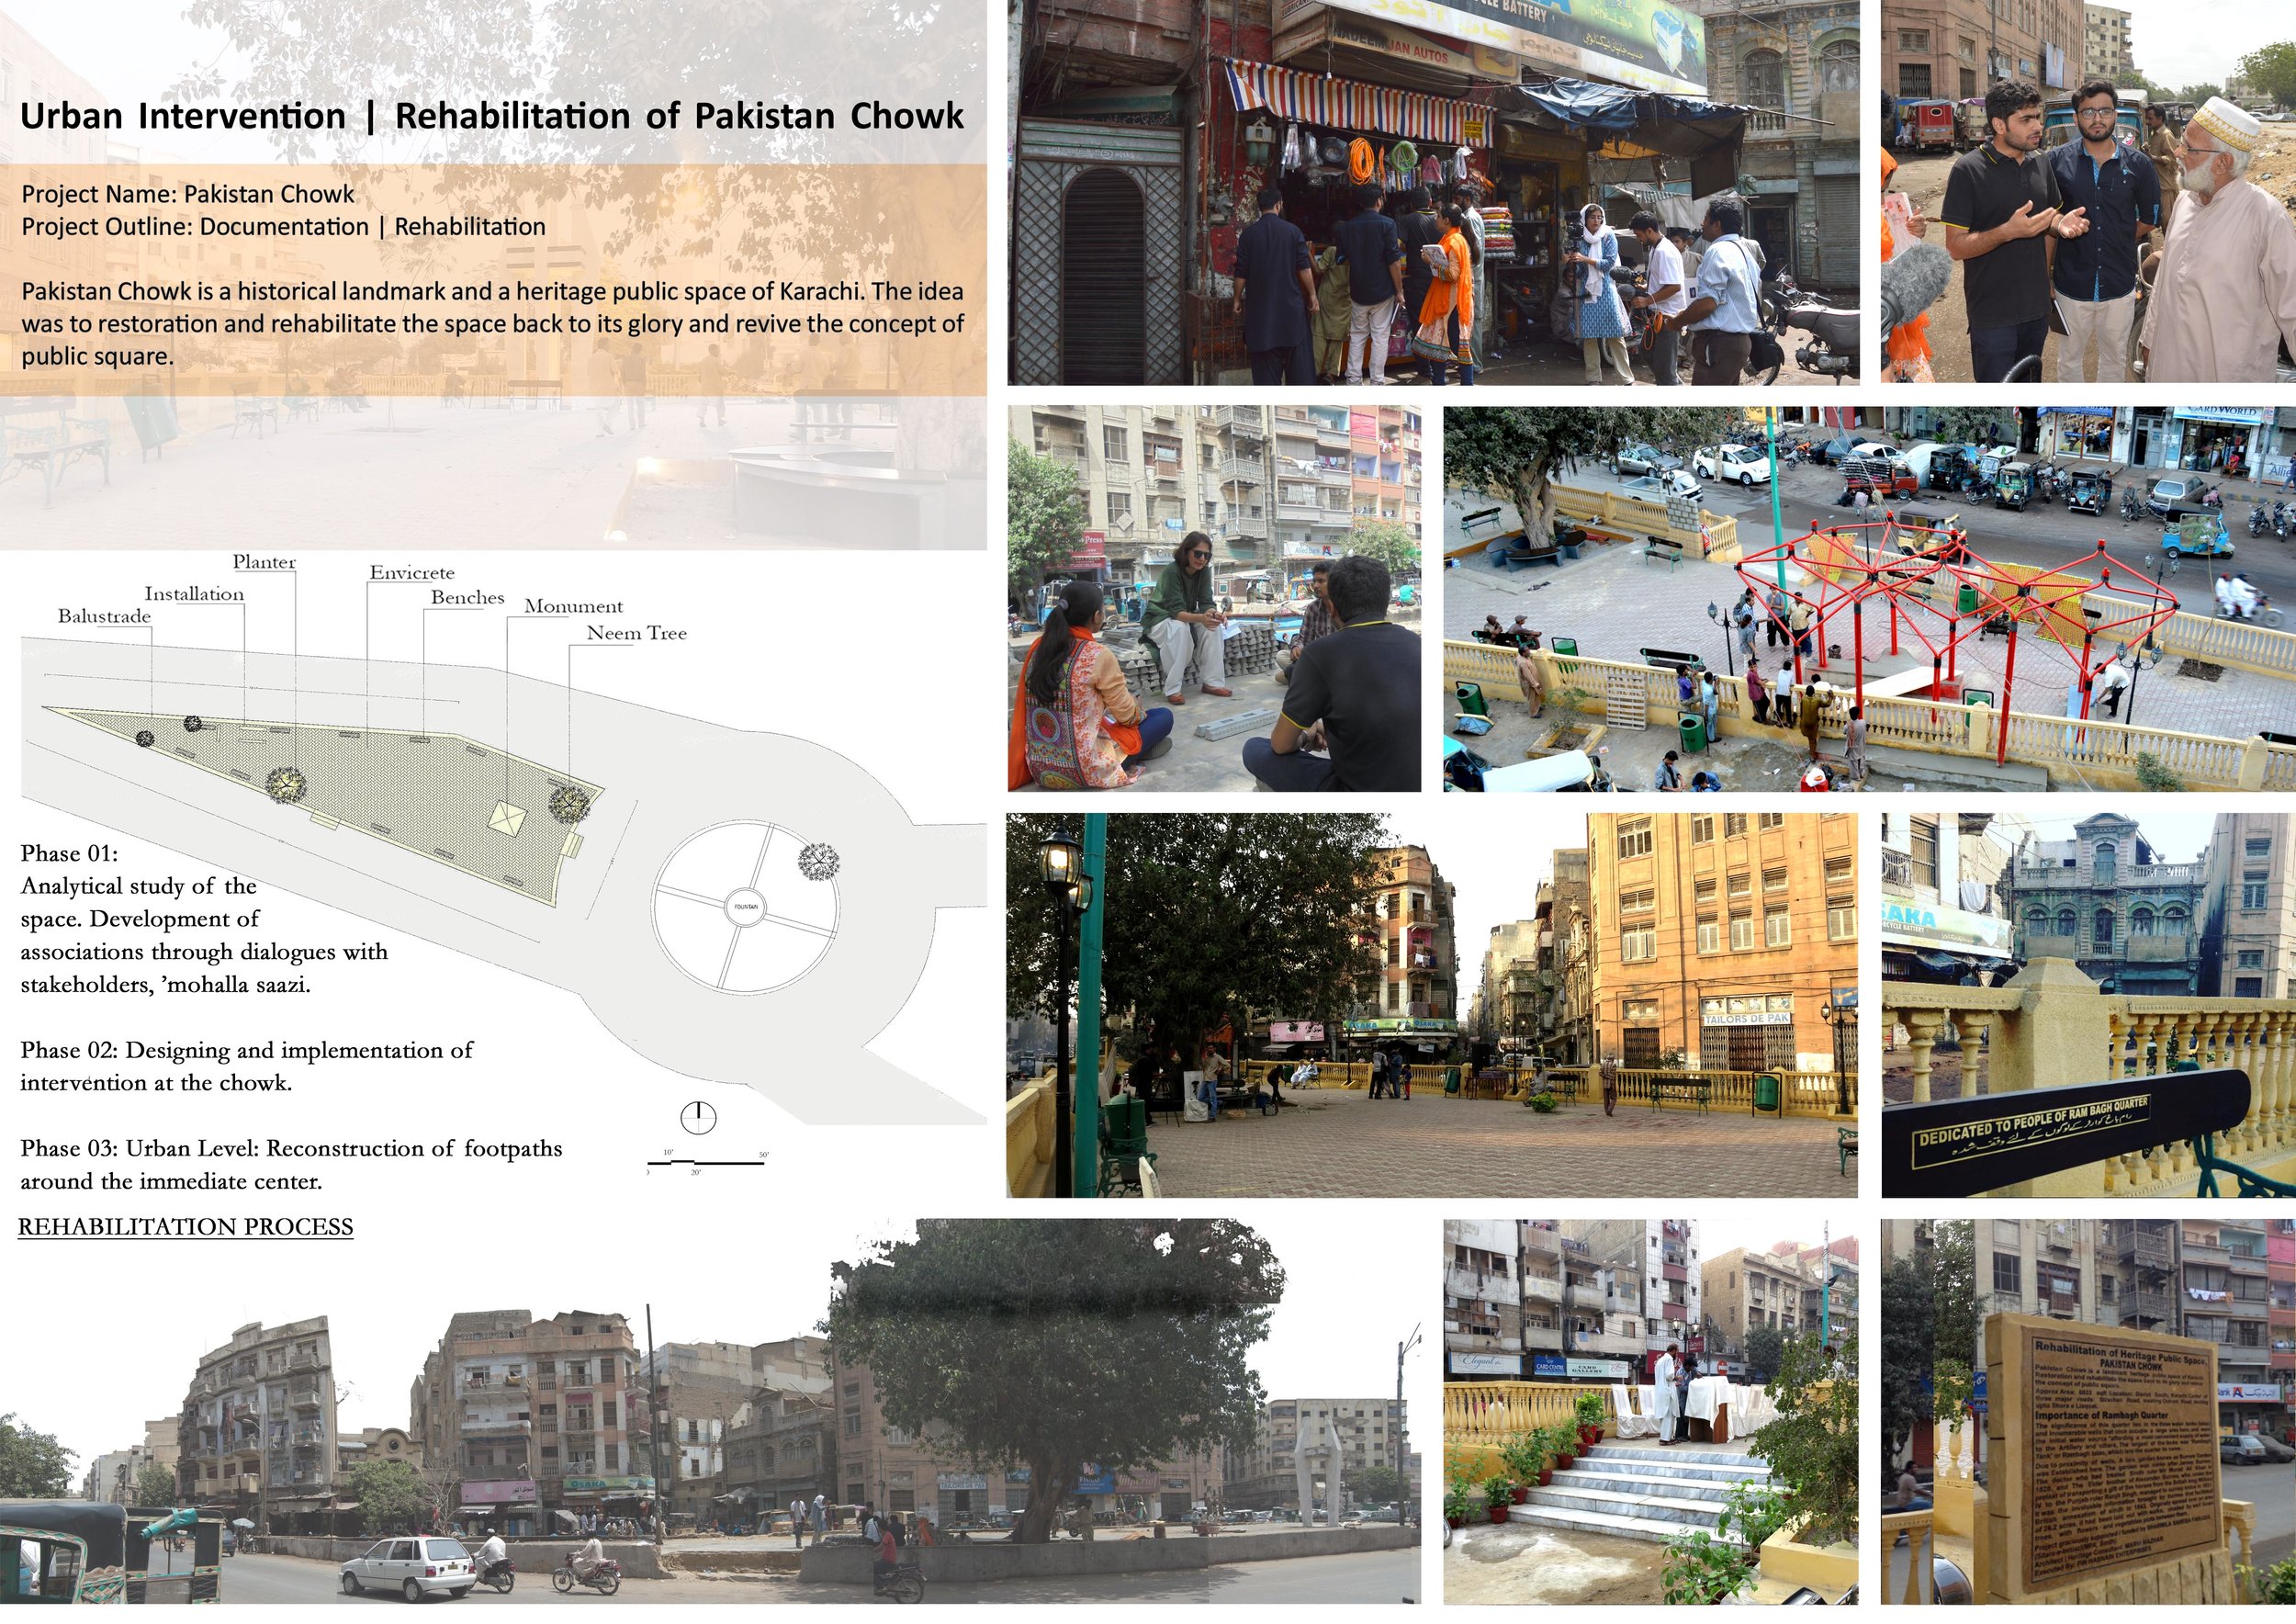 PakistanChowk - Portfolio - 05012017.jpg